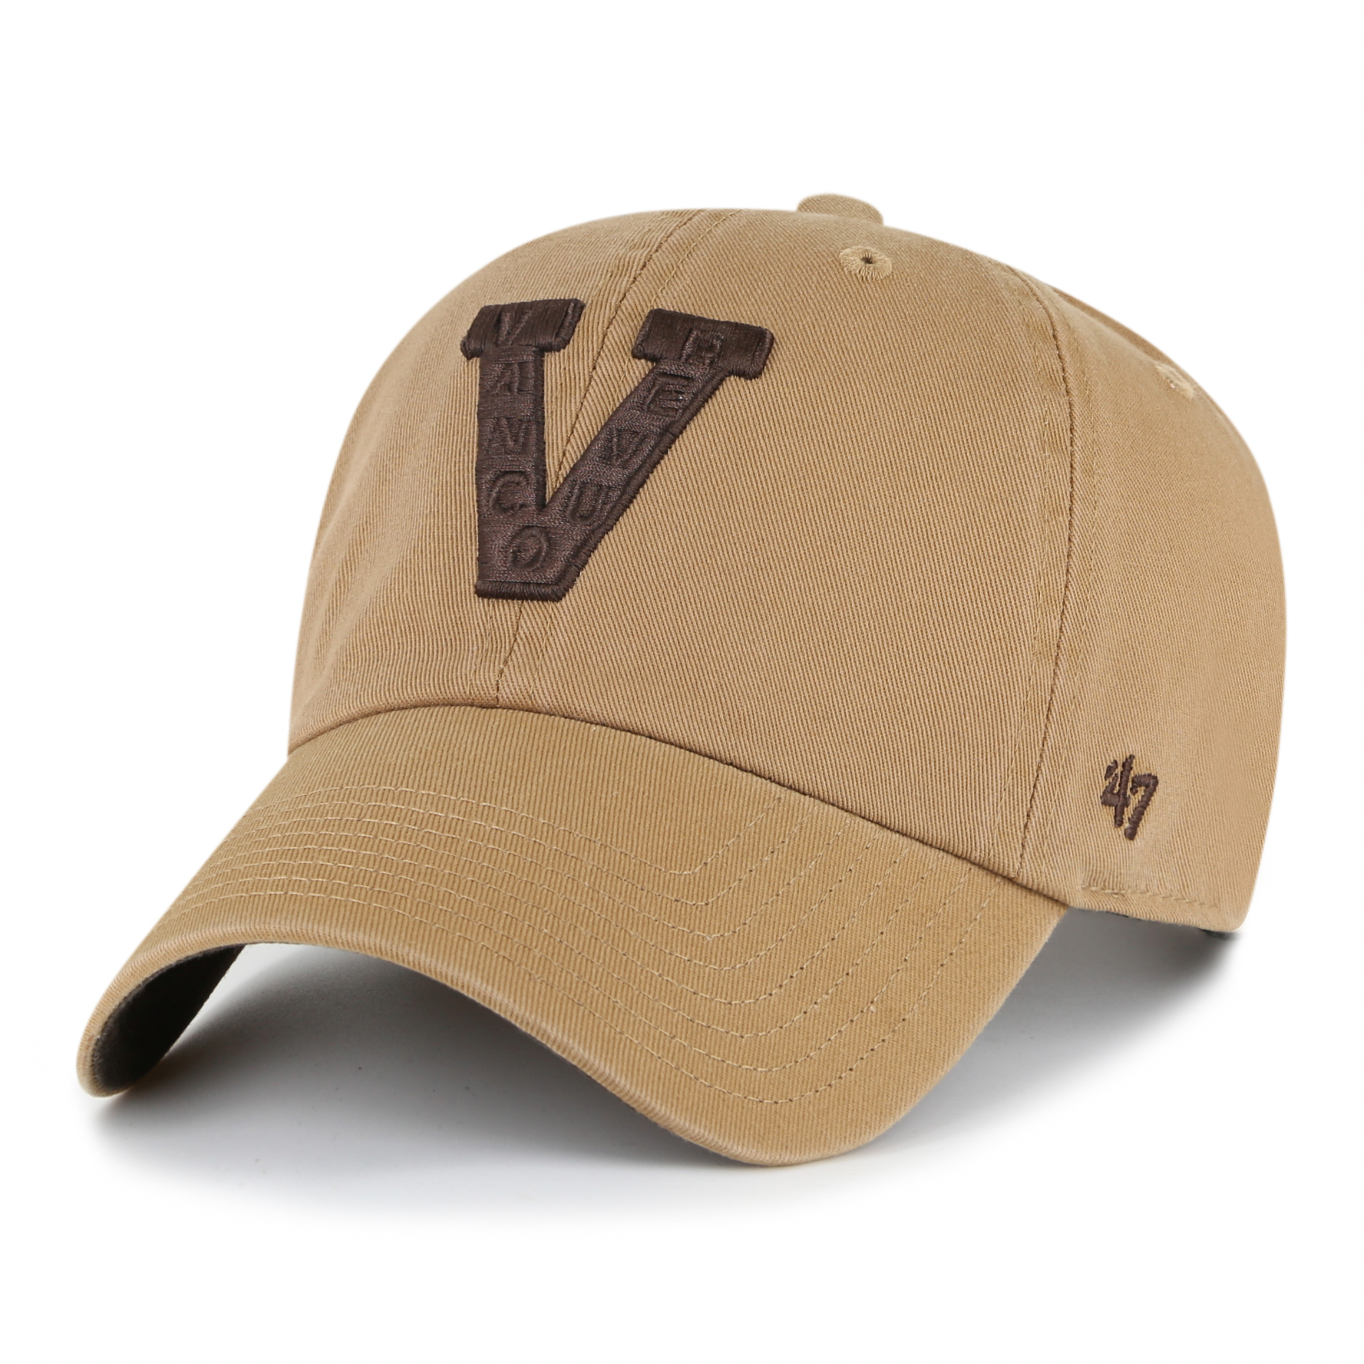 47 Hats Legend Mvp New York Yankees Red - New York Yankees Png,Yankees Hat  Png - free transparent png images 